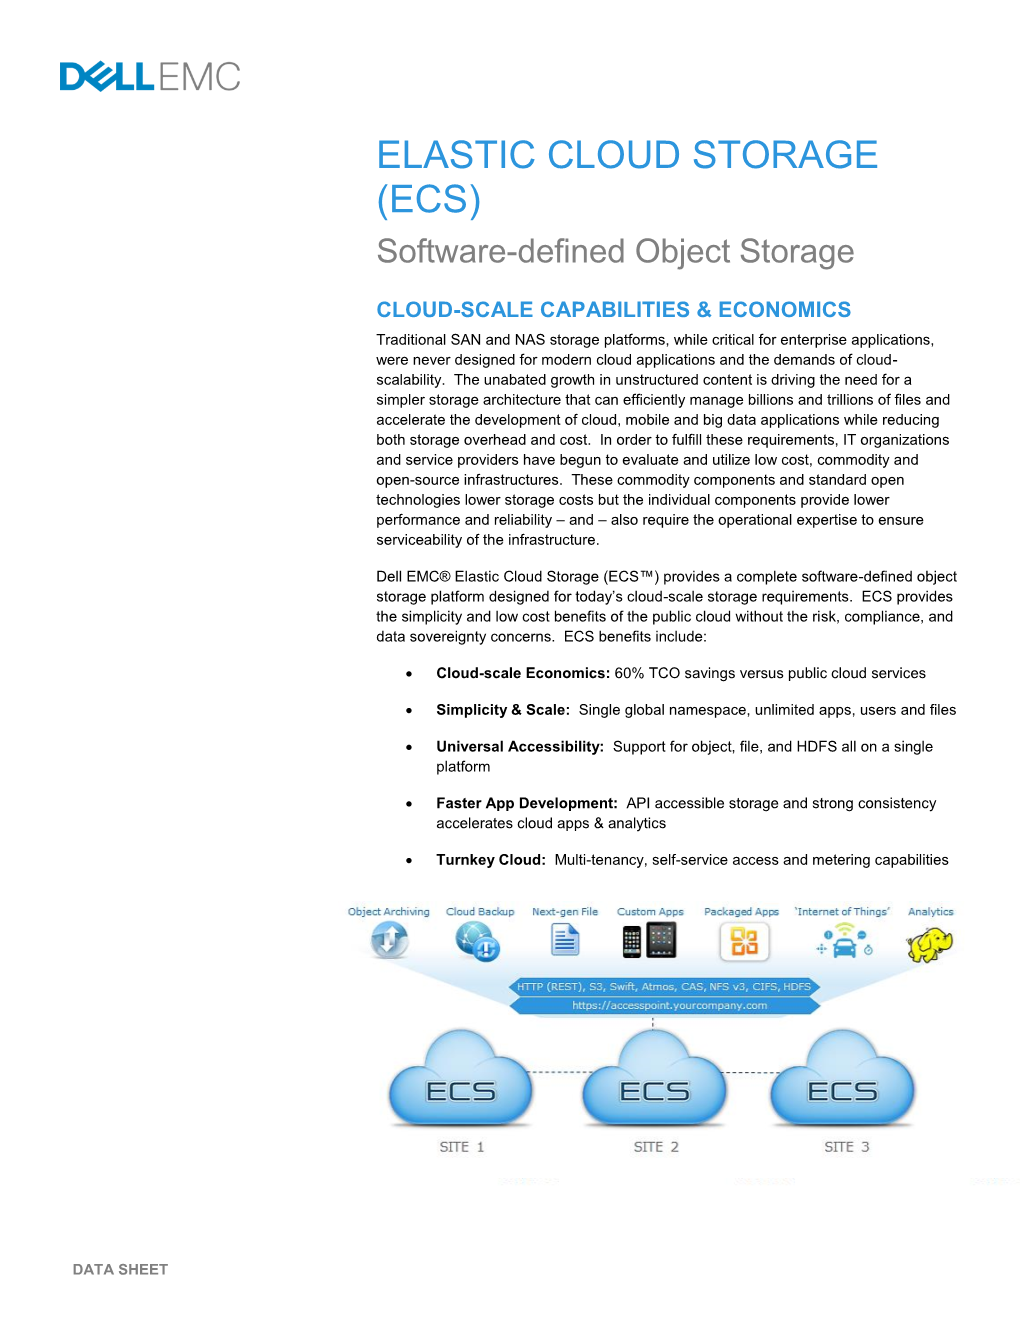 ELASTIC CLOUD STORAGE (ECS) Software-Defined Object Storage